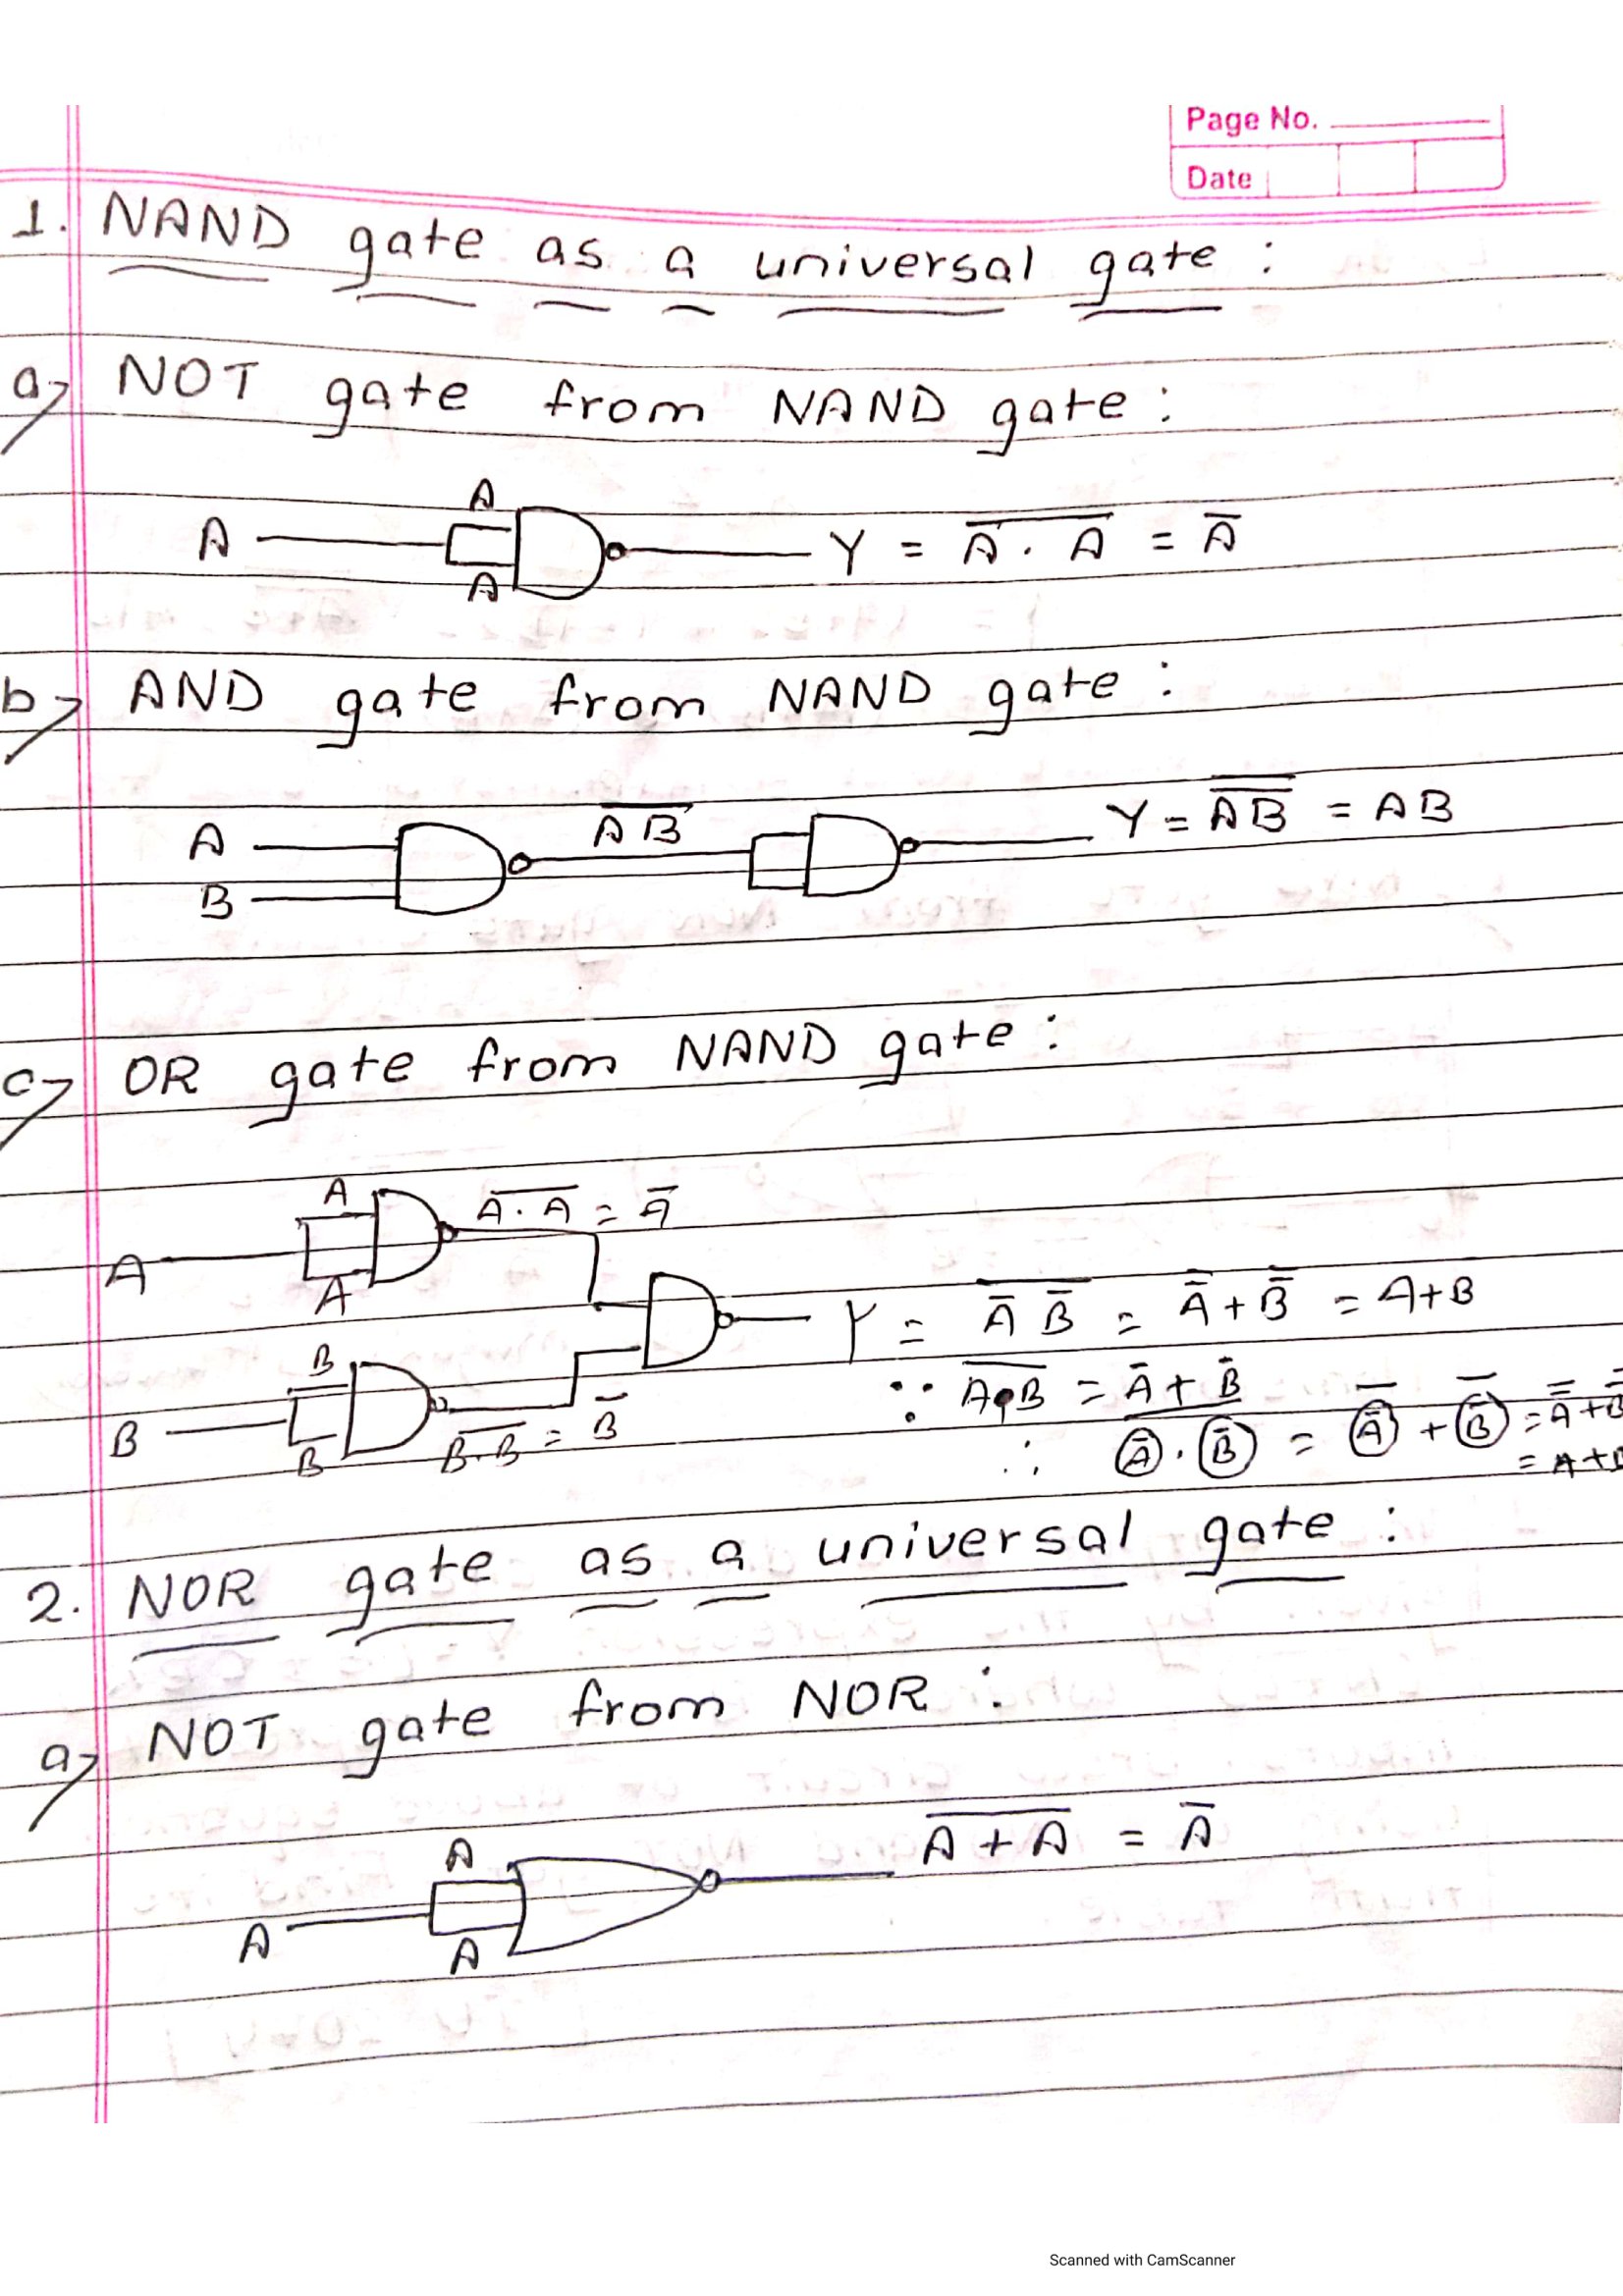 UNIVERSAL GATES: Universal Gates and Physics of Integrated Circuits: B.Sc. CSIT Physics Unit 7 Notes